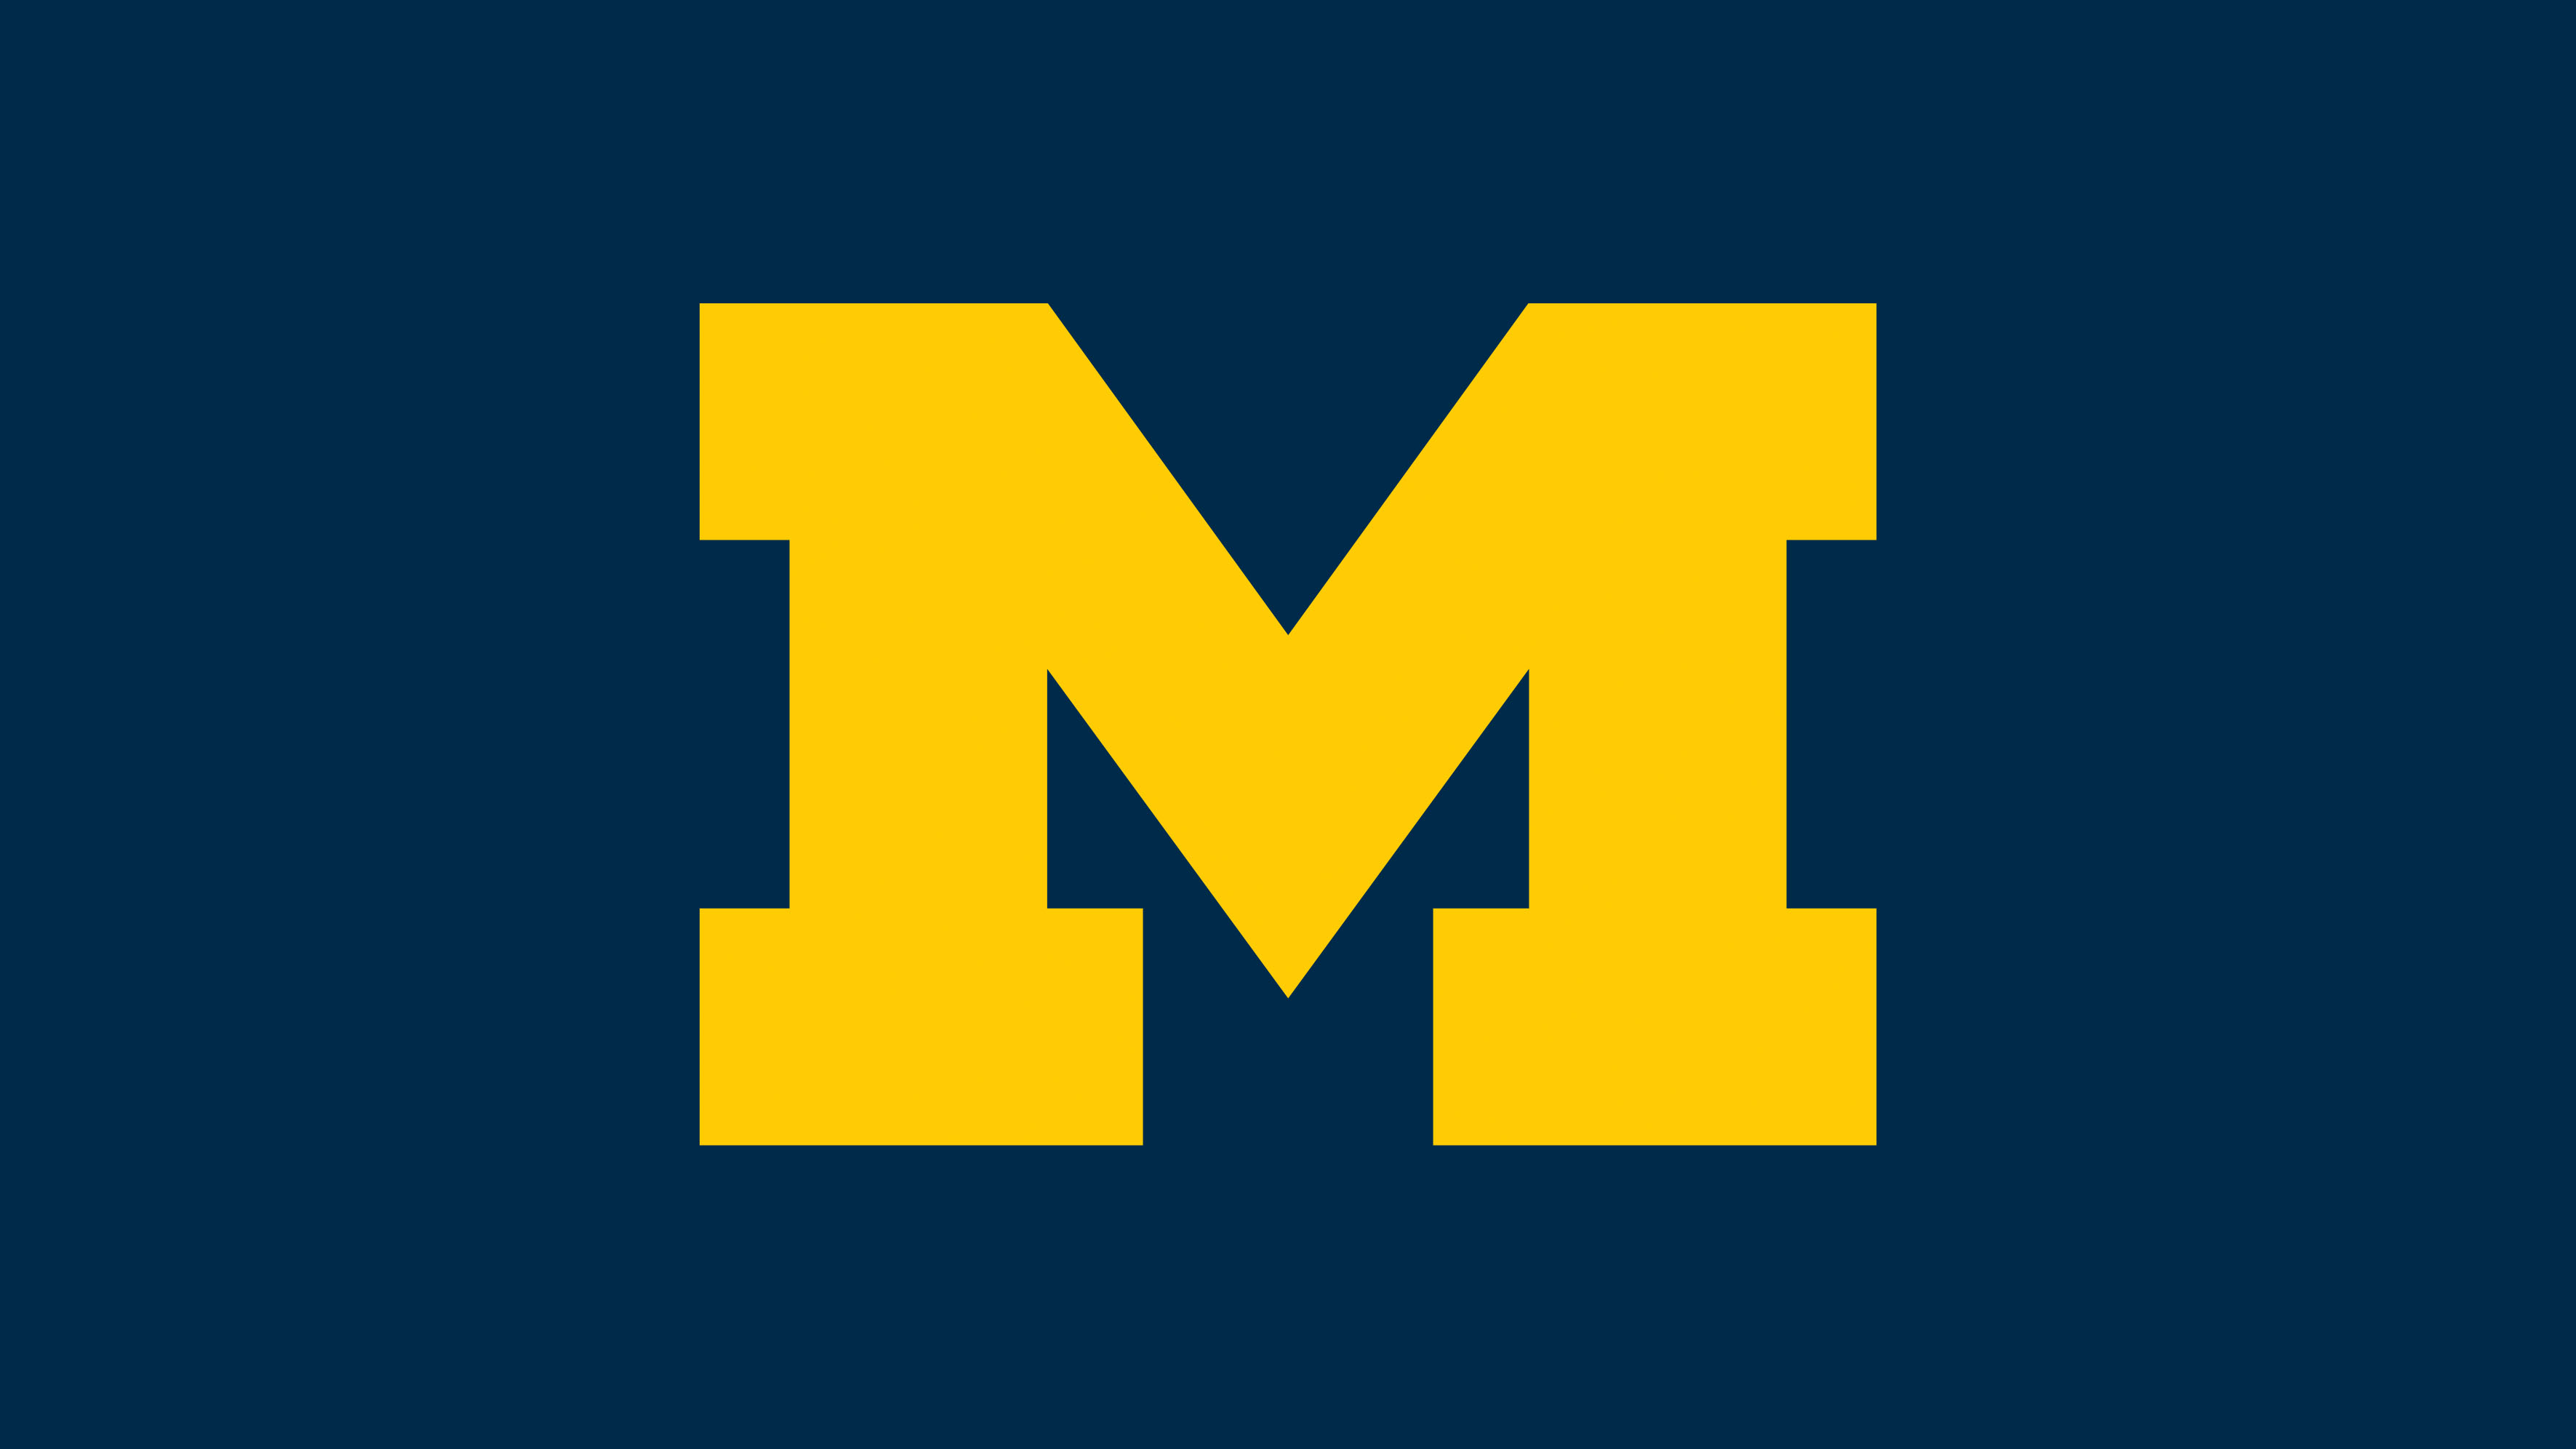 University of Michigan "M" logo